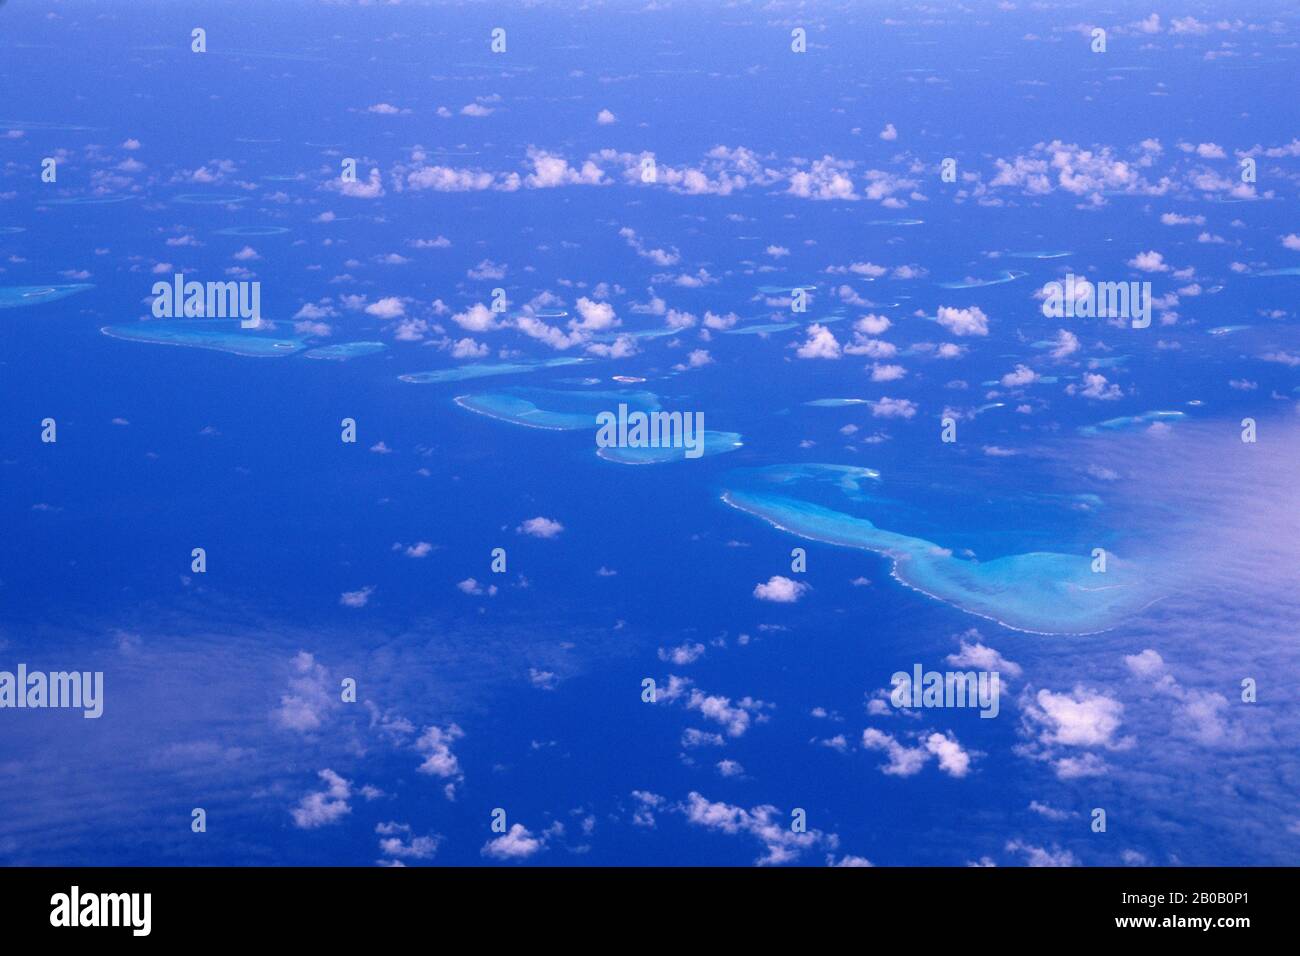 MALDIVE ISLANDS, AERIAL VIEW OF ATOLLS Stock Photo